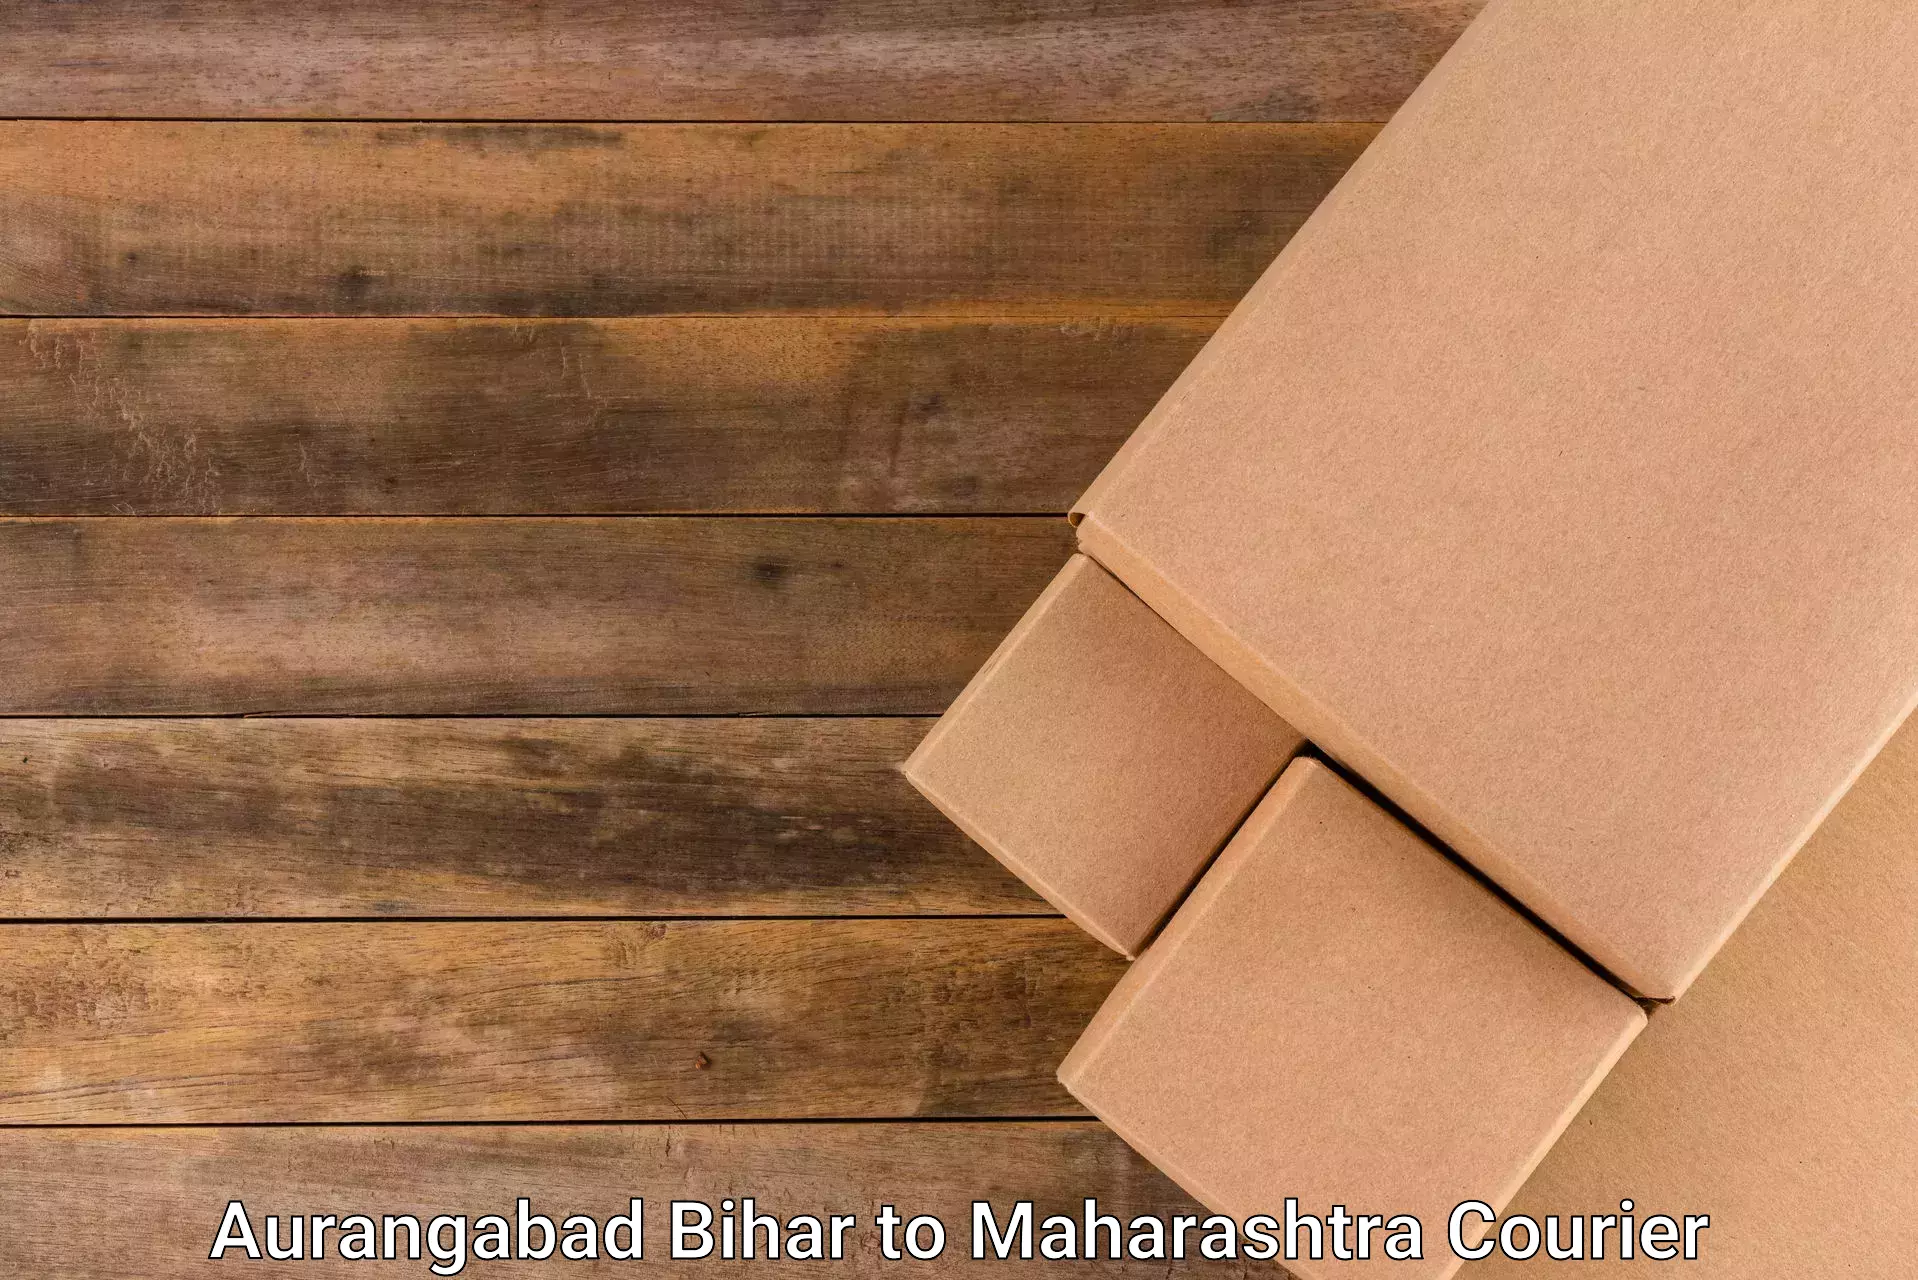 Digital courier platforms Aurangabad Bihar to Jaysingpur